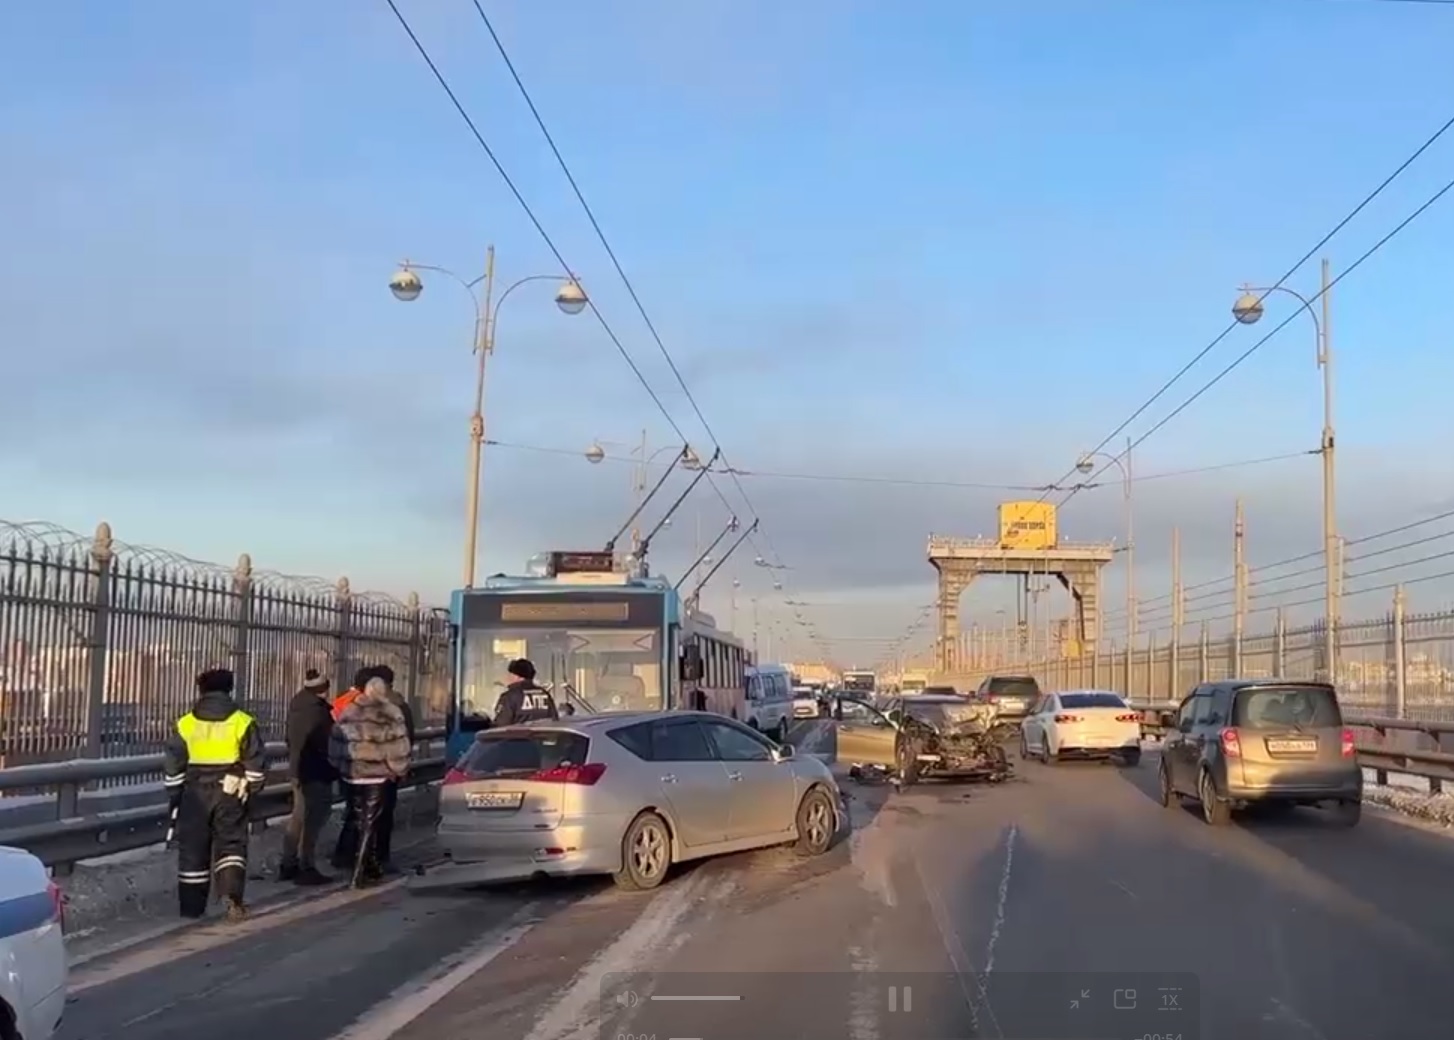 ДТП с троллейбусами на плотине ГЭС в Иркутске произошло из-за мерседеса на встречке